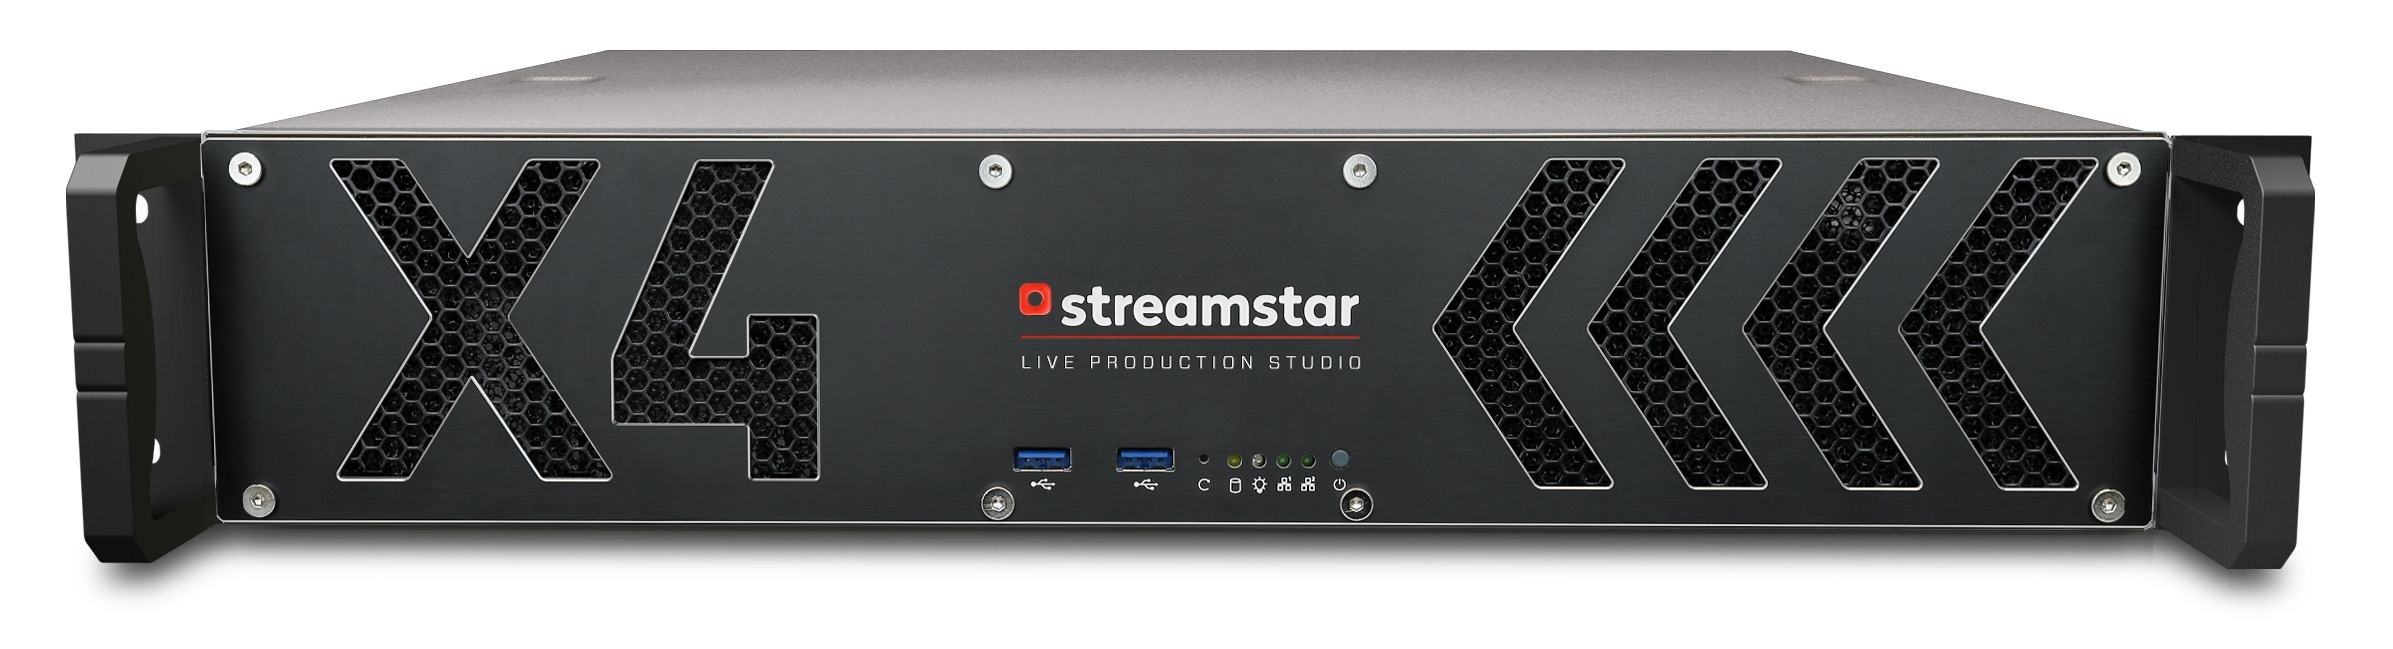 Streamstar X4 Generation 2 - 1080i